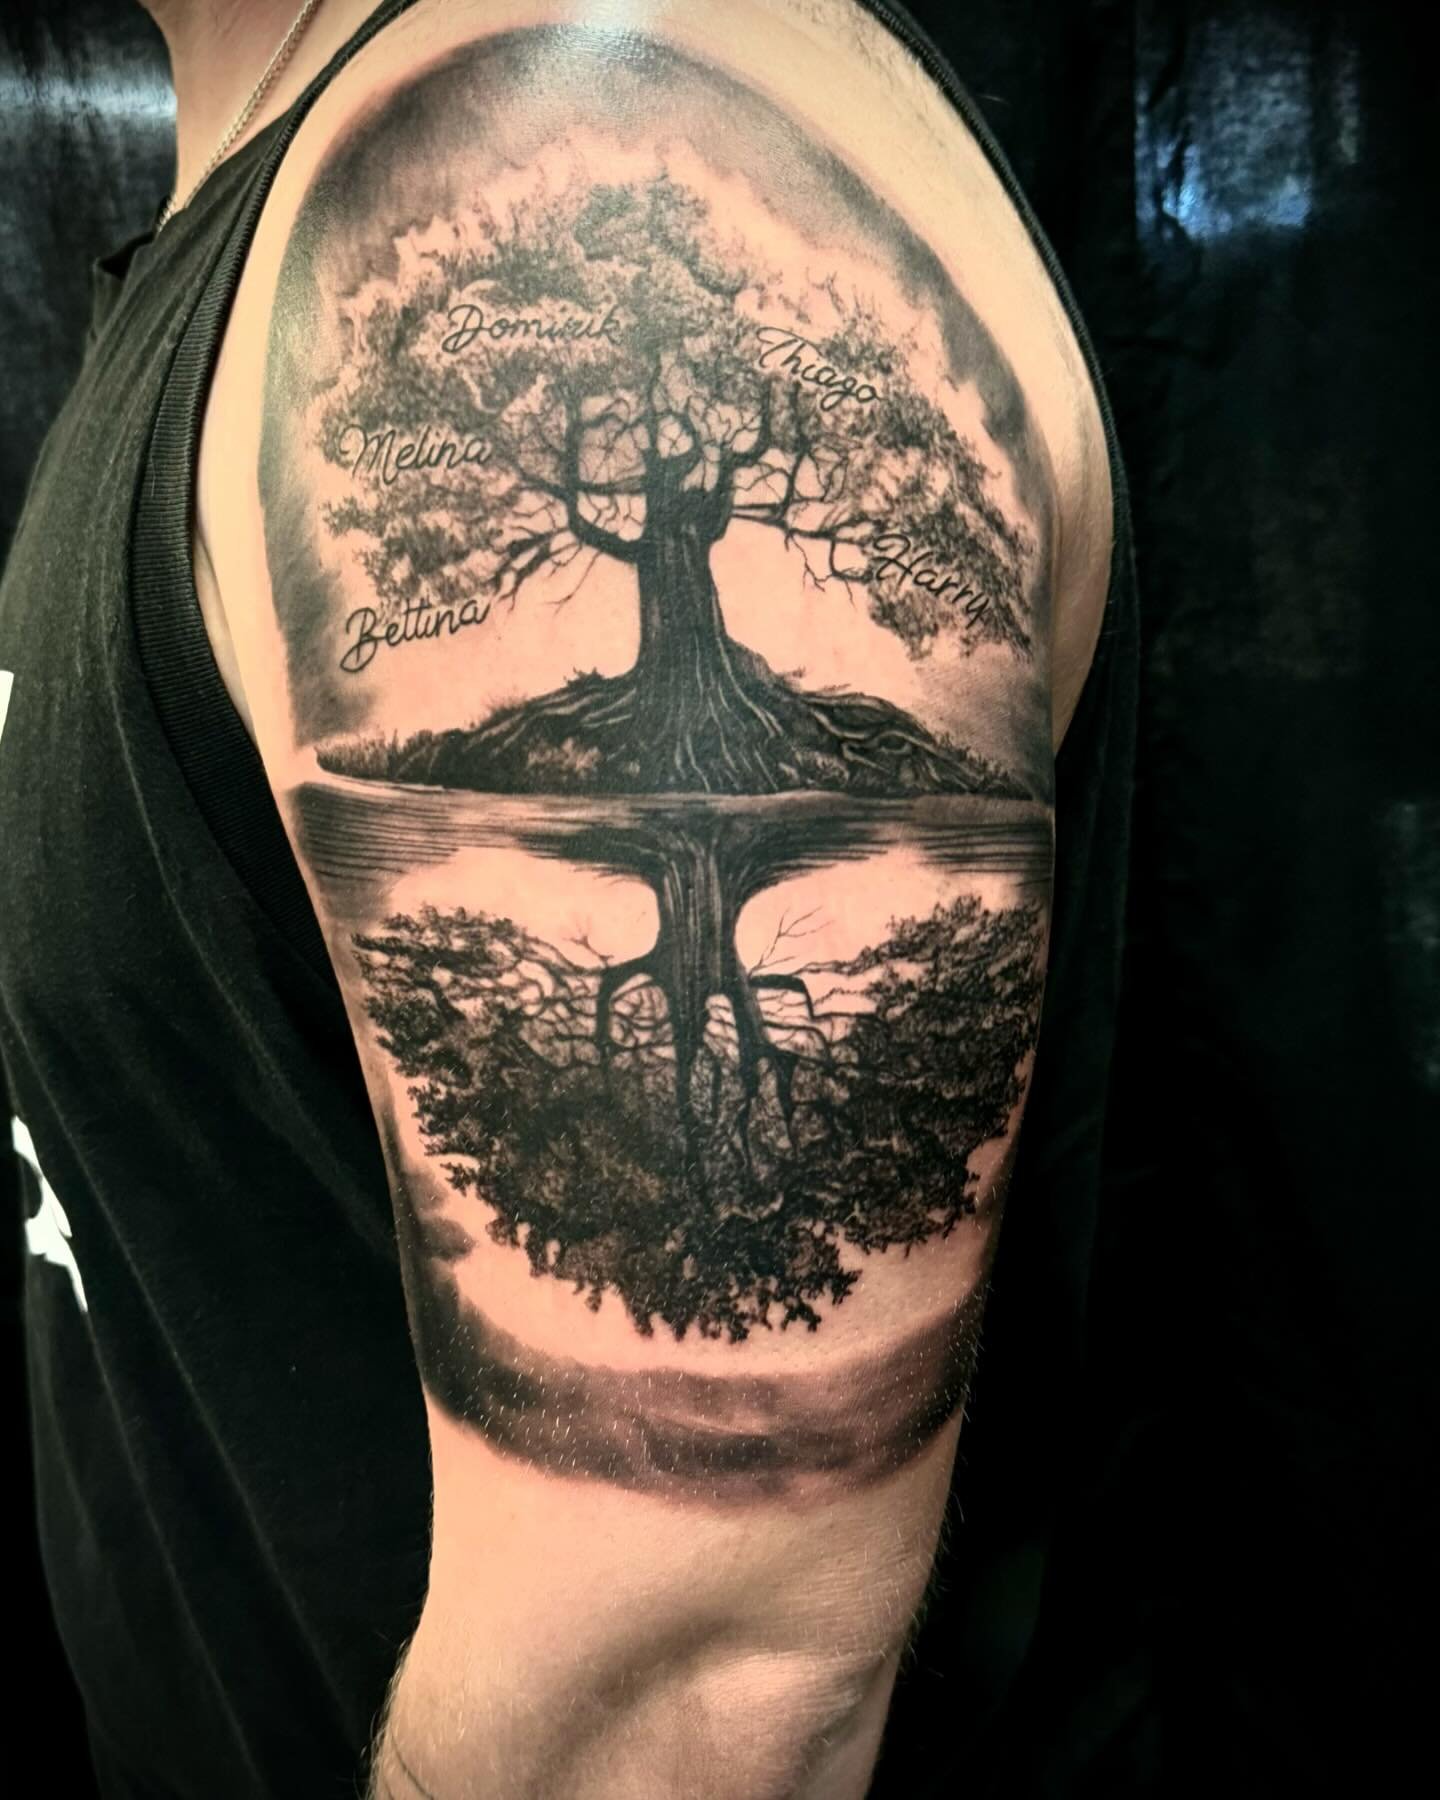 Family tree
.
.
.
#tattoo #tattoos #tattooartist #ink #inked #tattooed #tattooideas #birsfelden #basel #studio #switzerland #tattooformen #landscapetattoo #laketattoo #naturetattoo #treetattoo #familytree